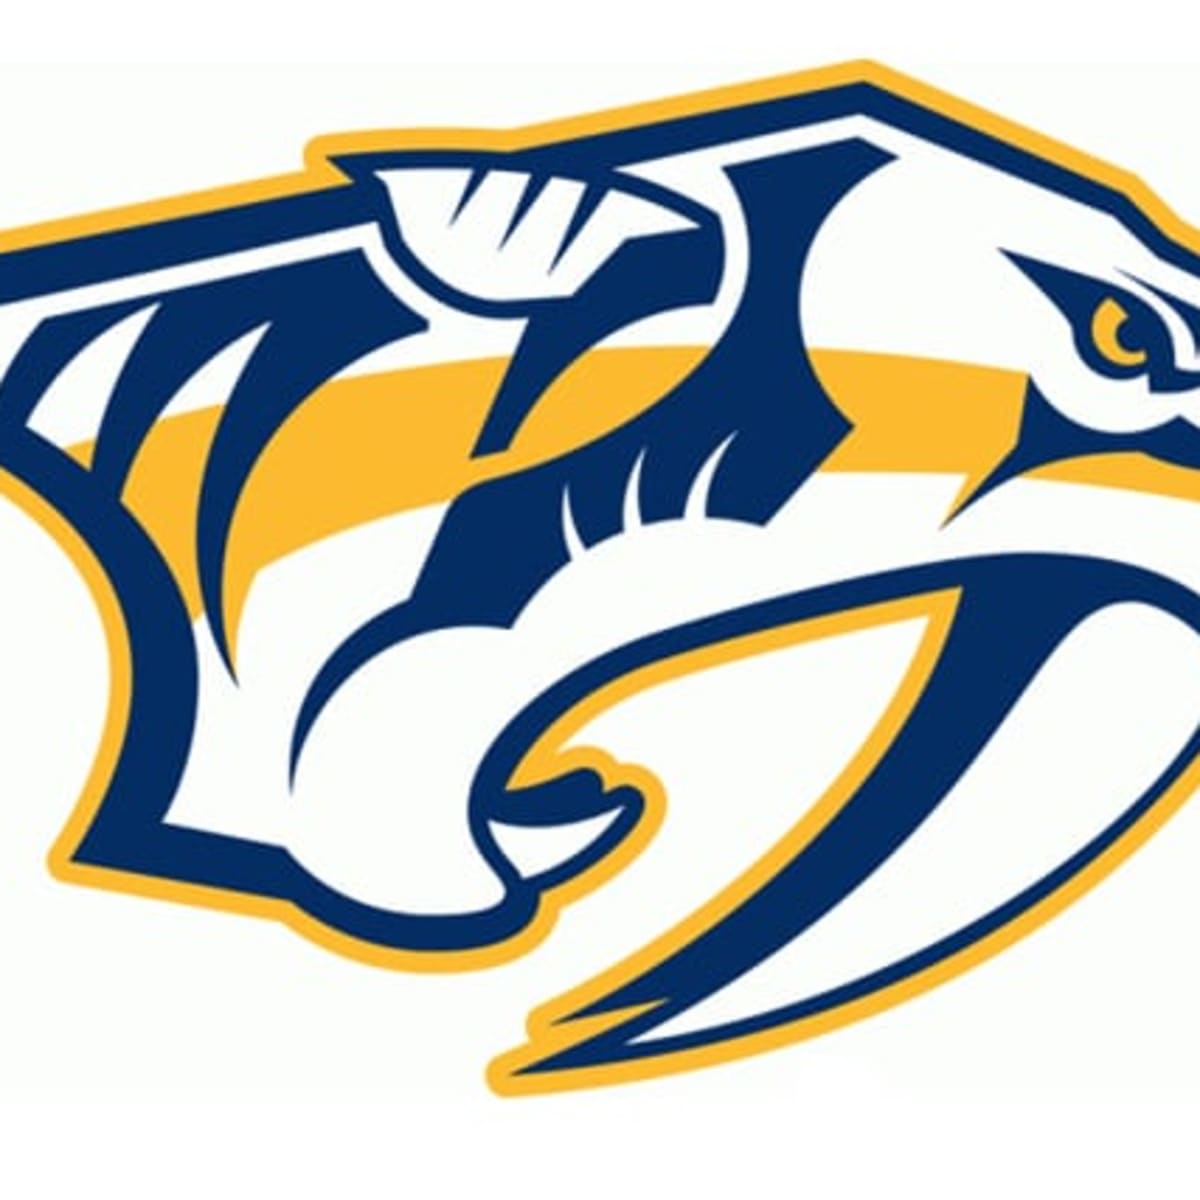 Toronto Maple Leafs Primary Logo - National Hockey League (NHL) - Chris  Creamer's Sports Logos Page 